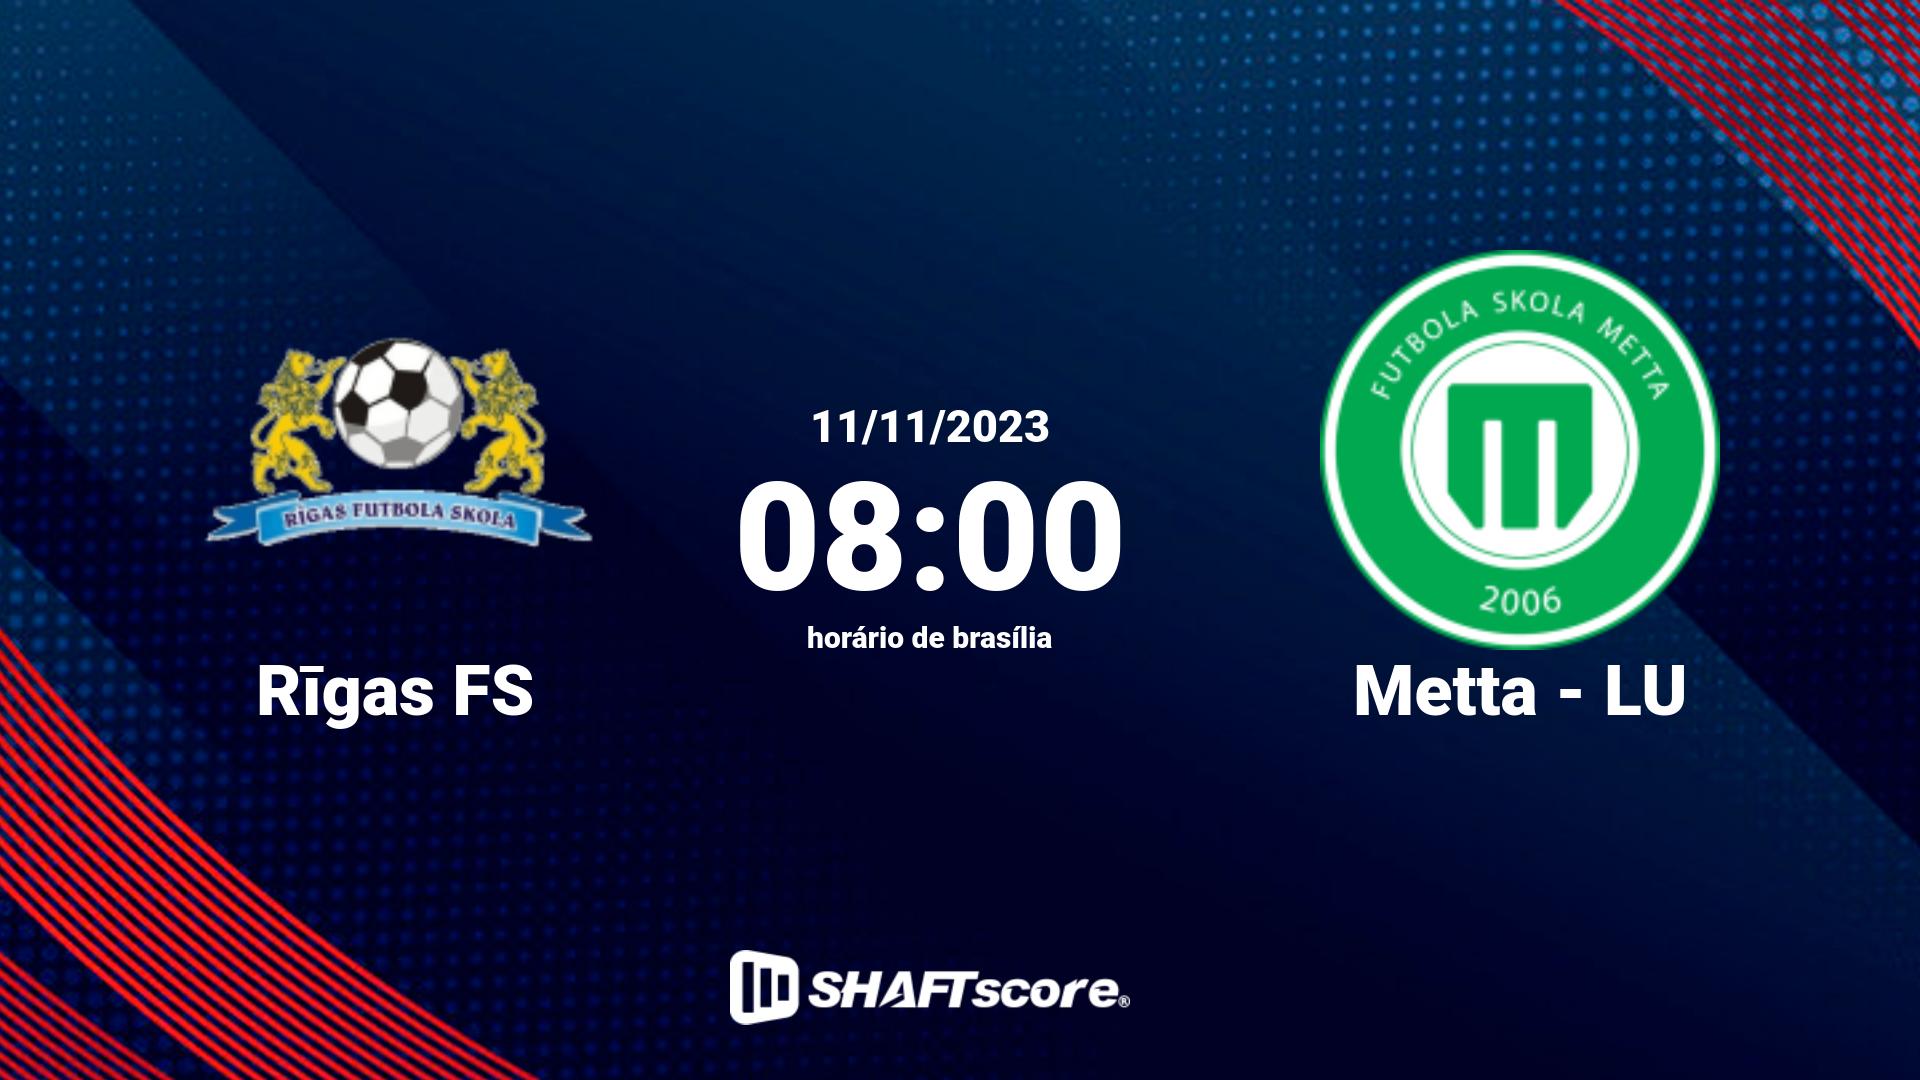 Estatísticas do jogo Rīgas FS vs Metta - LU 11.11 08:00